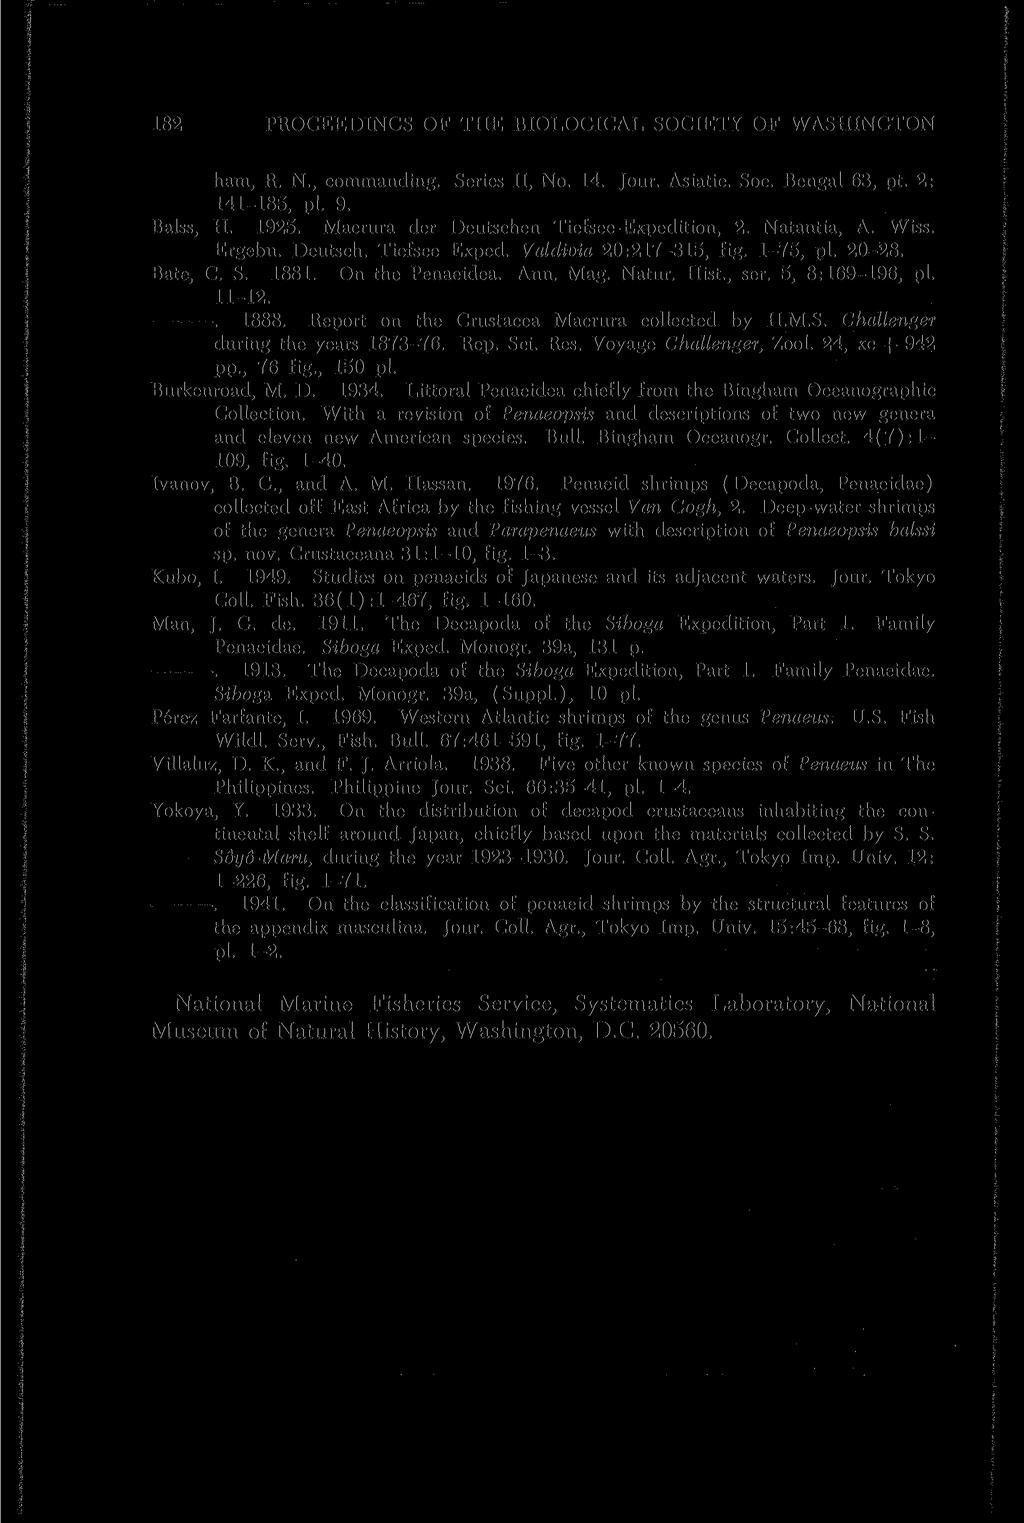 182 PROCEEDINGS OF THE BIOLOGICAL SOCIETY OF WASHINGTON ham, R. N., commanding. Series II, No. 14. Jour. Asiatic. Soc. Bengal 63, pt. 2: 141-185, pi. 9. Balss, H. 1925.